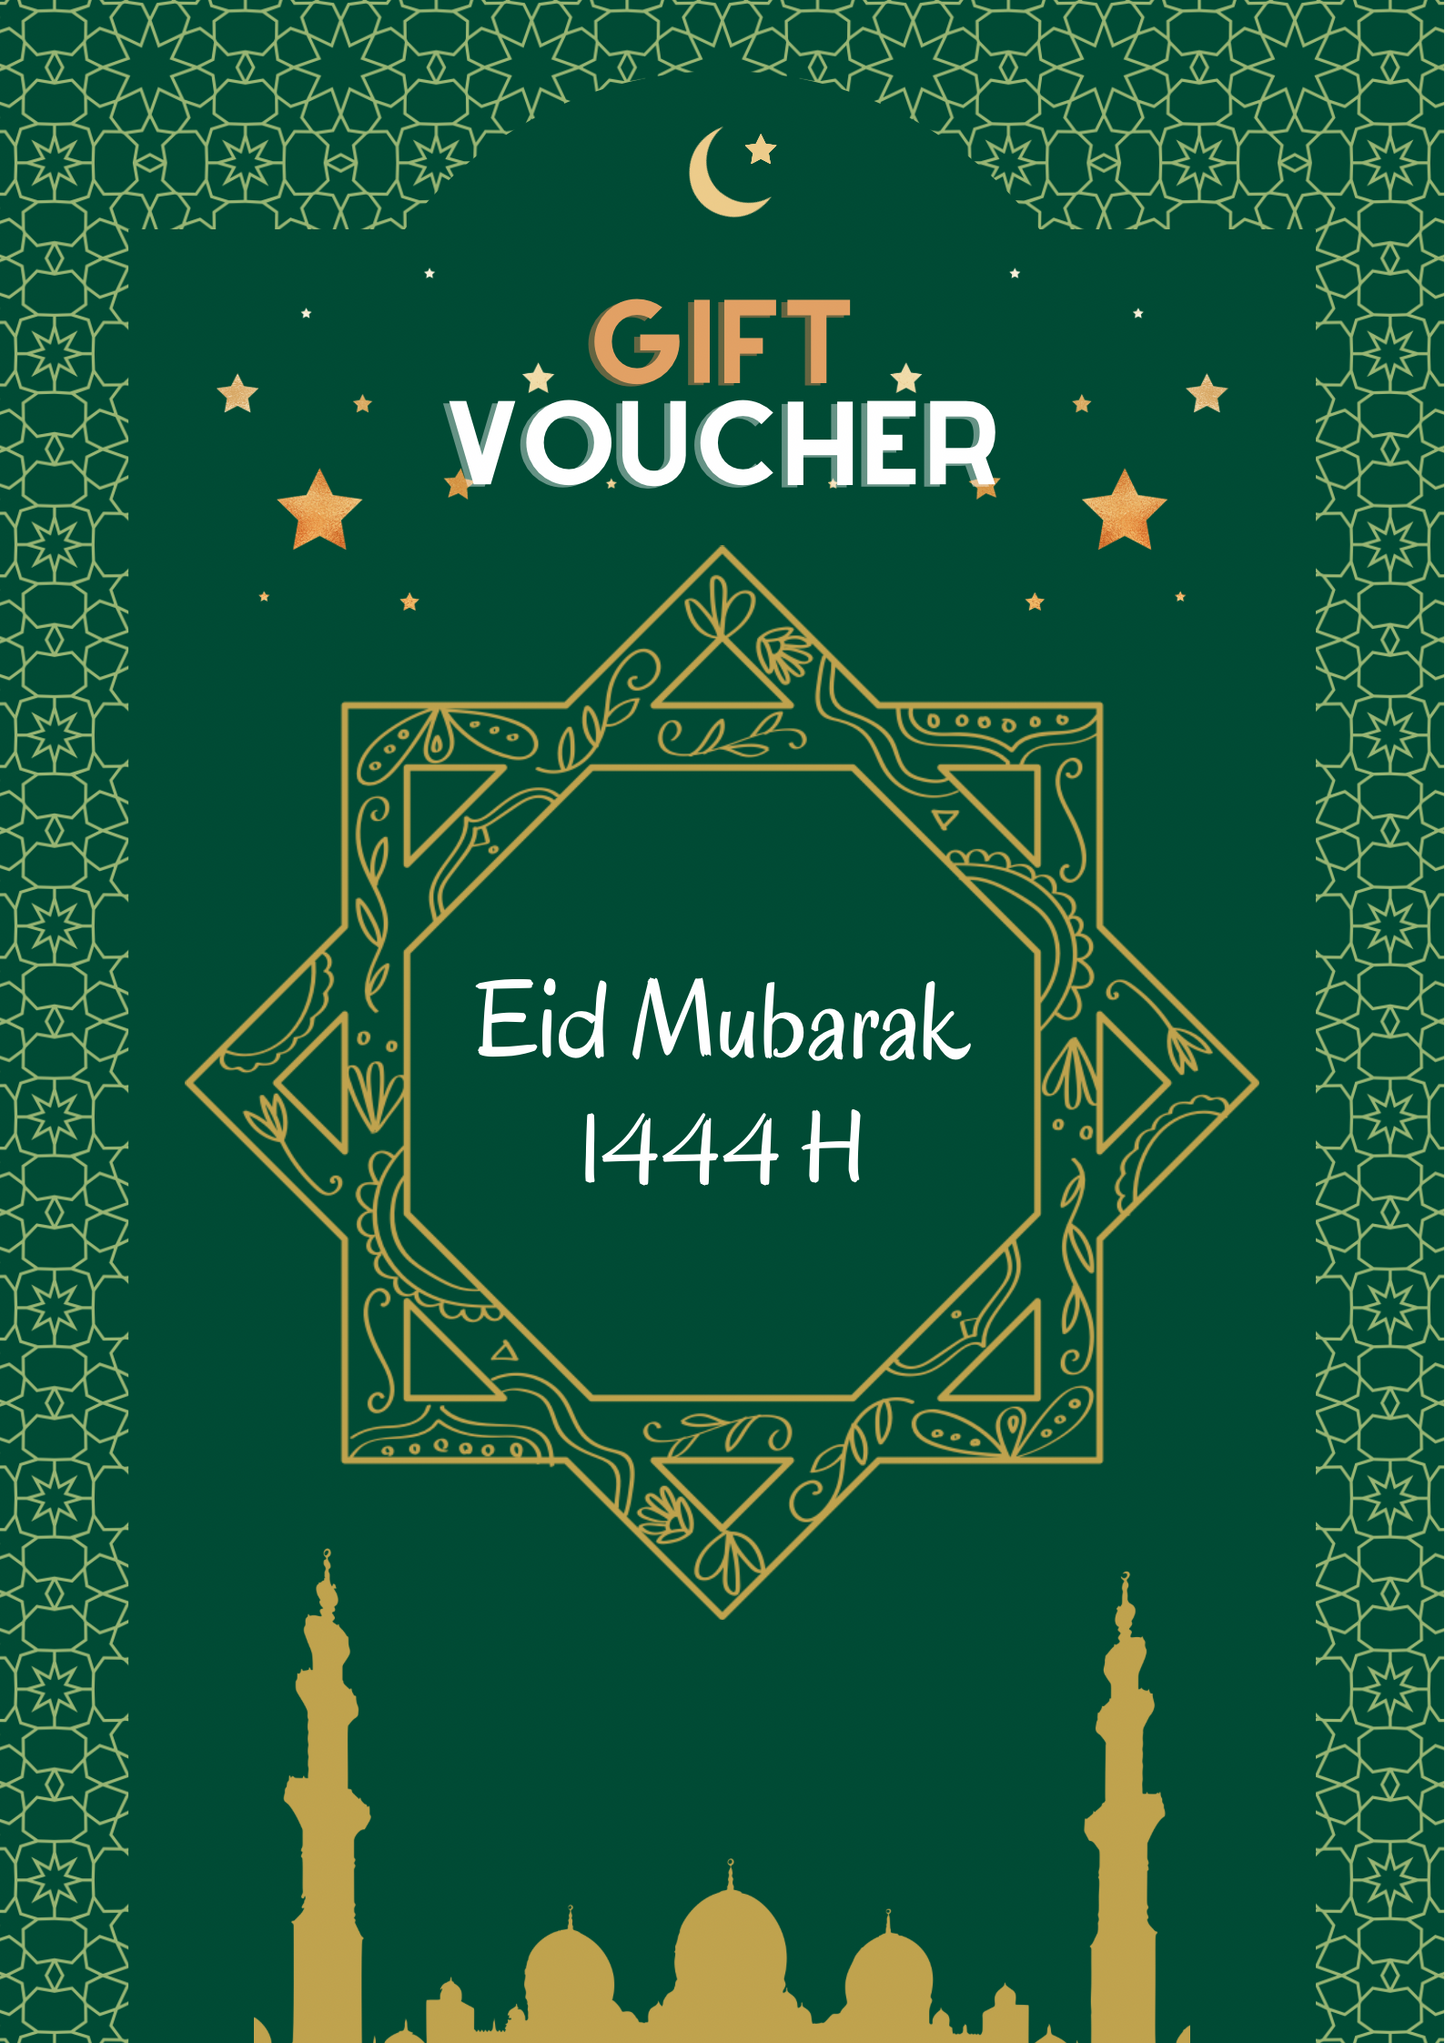 Eid Mubarak Gift Voucher